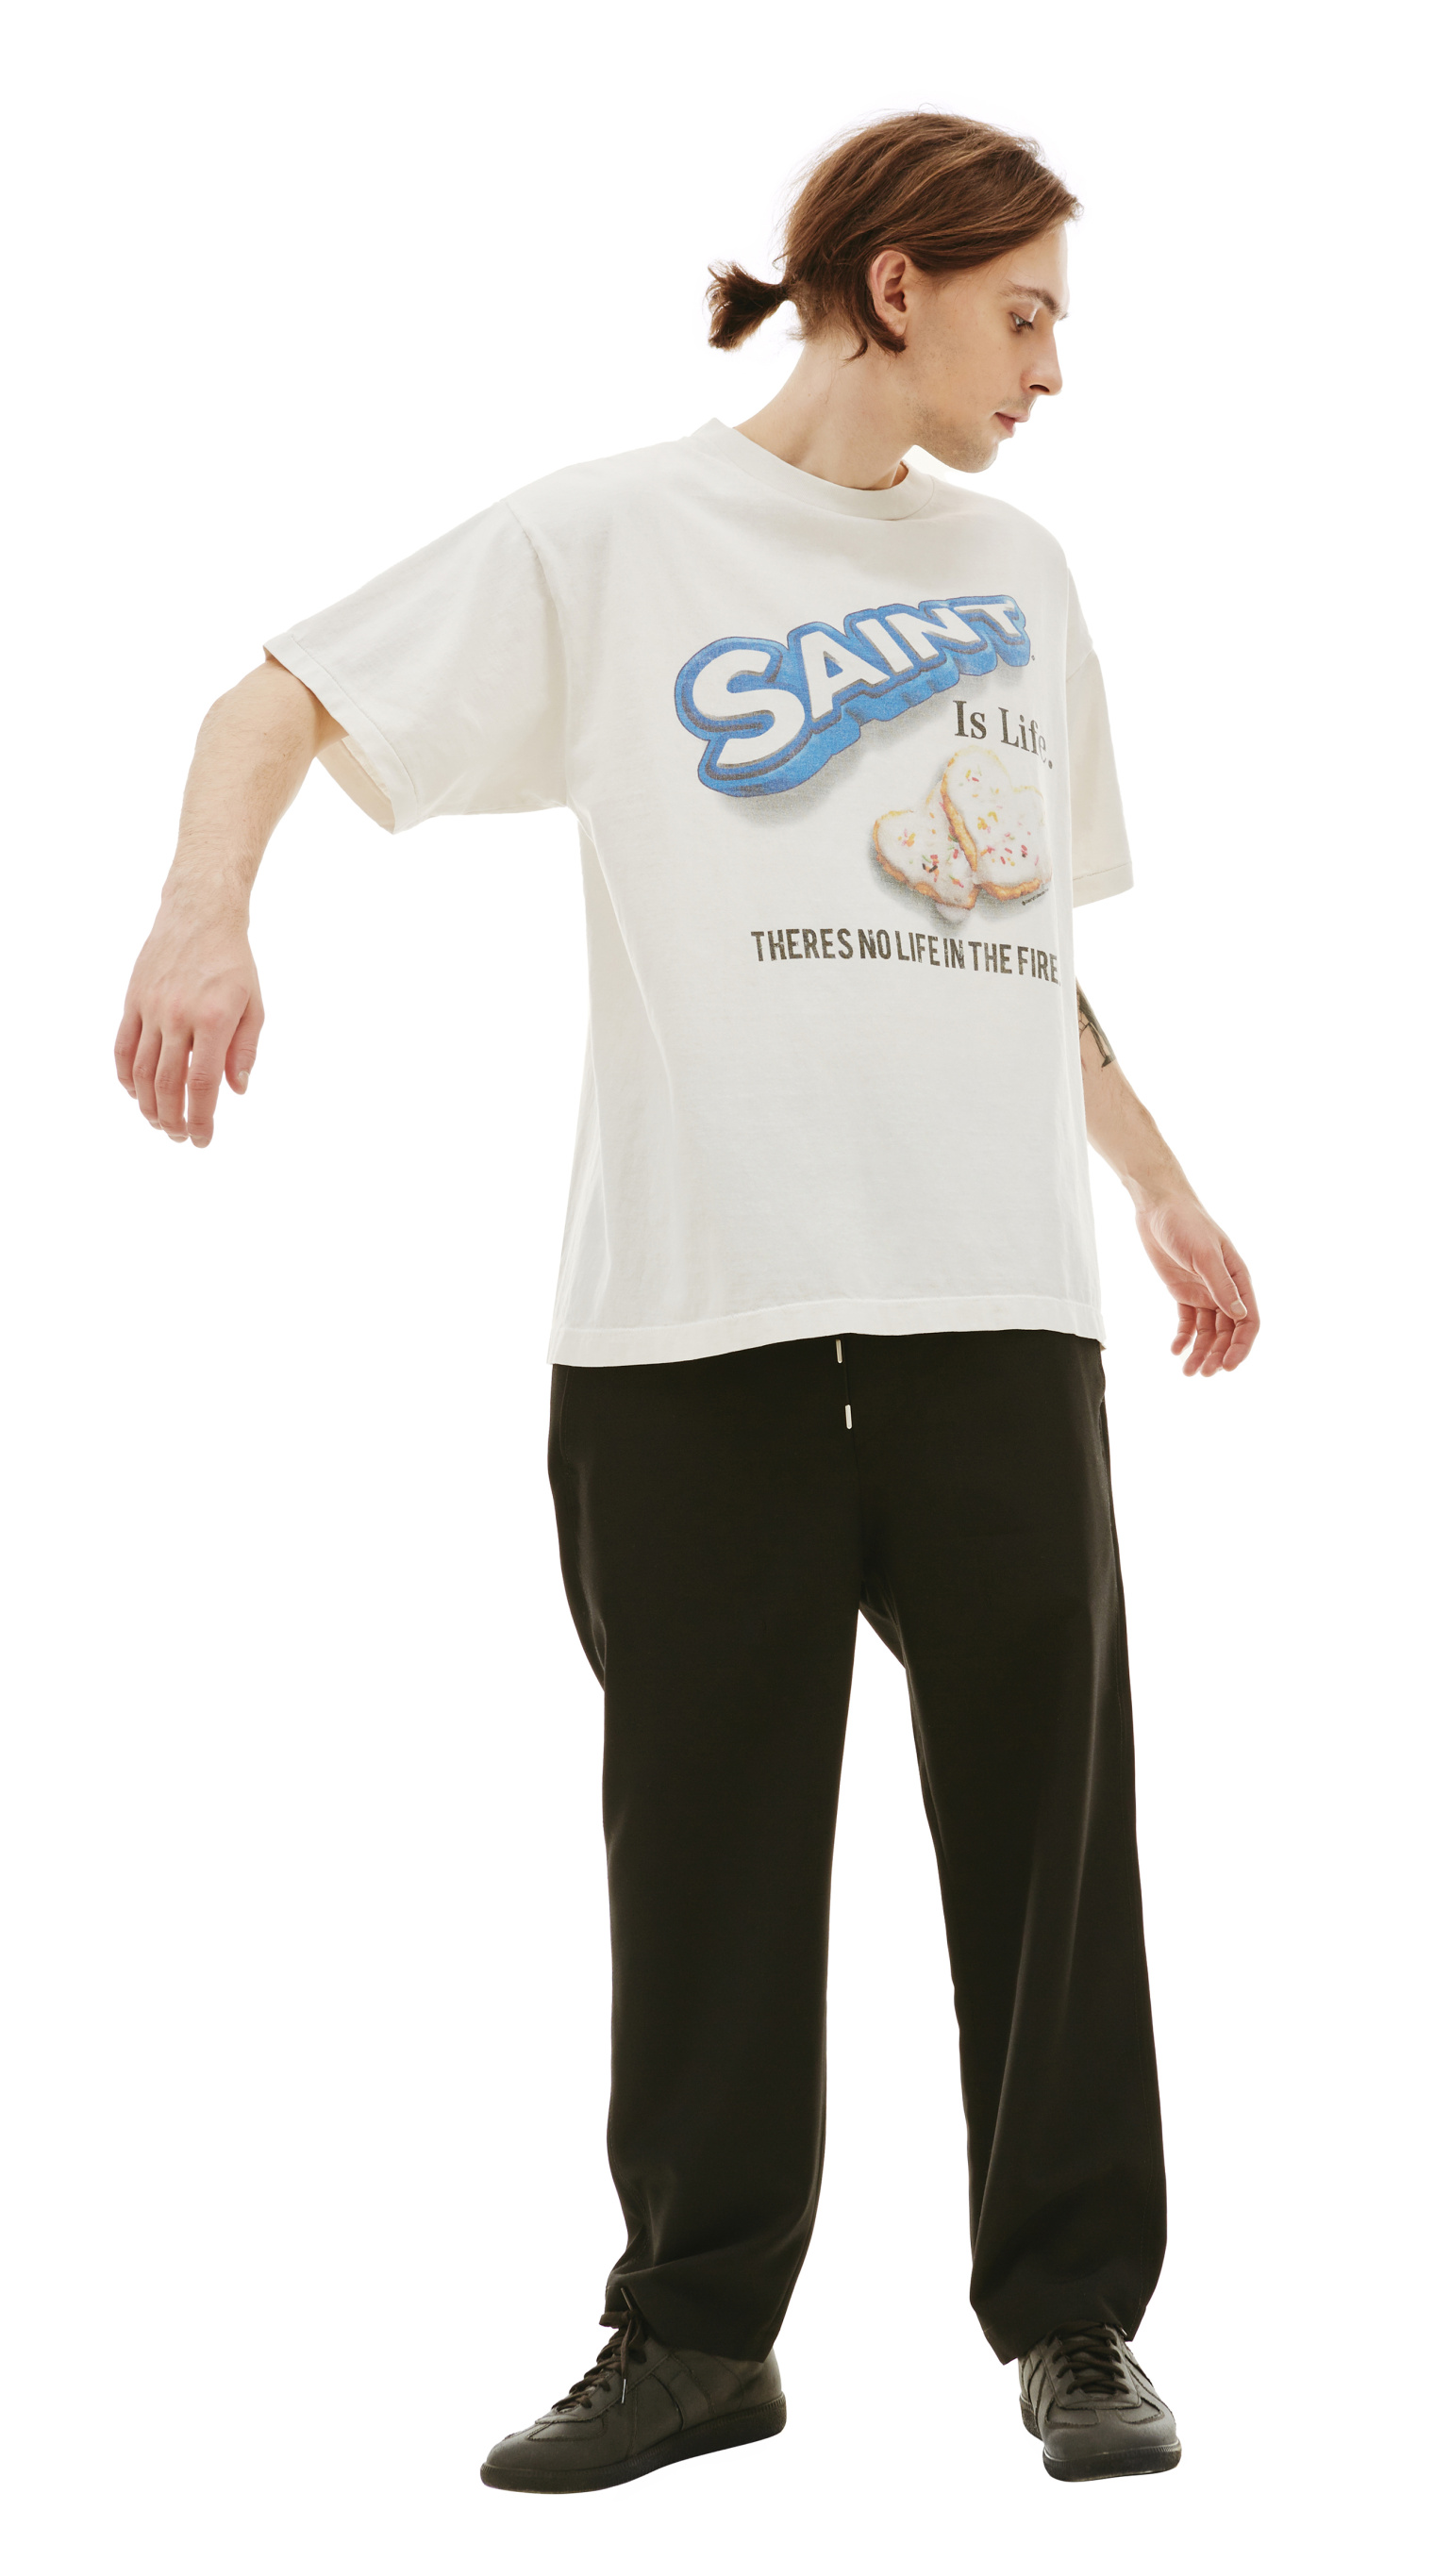 Saint Michael OREO cotton t-shirt